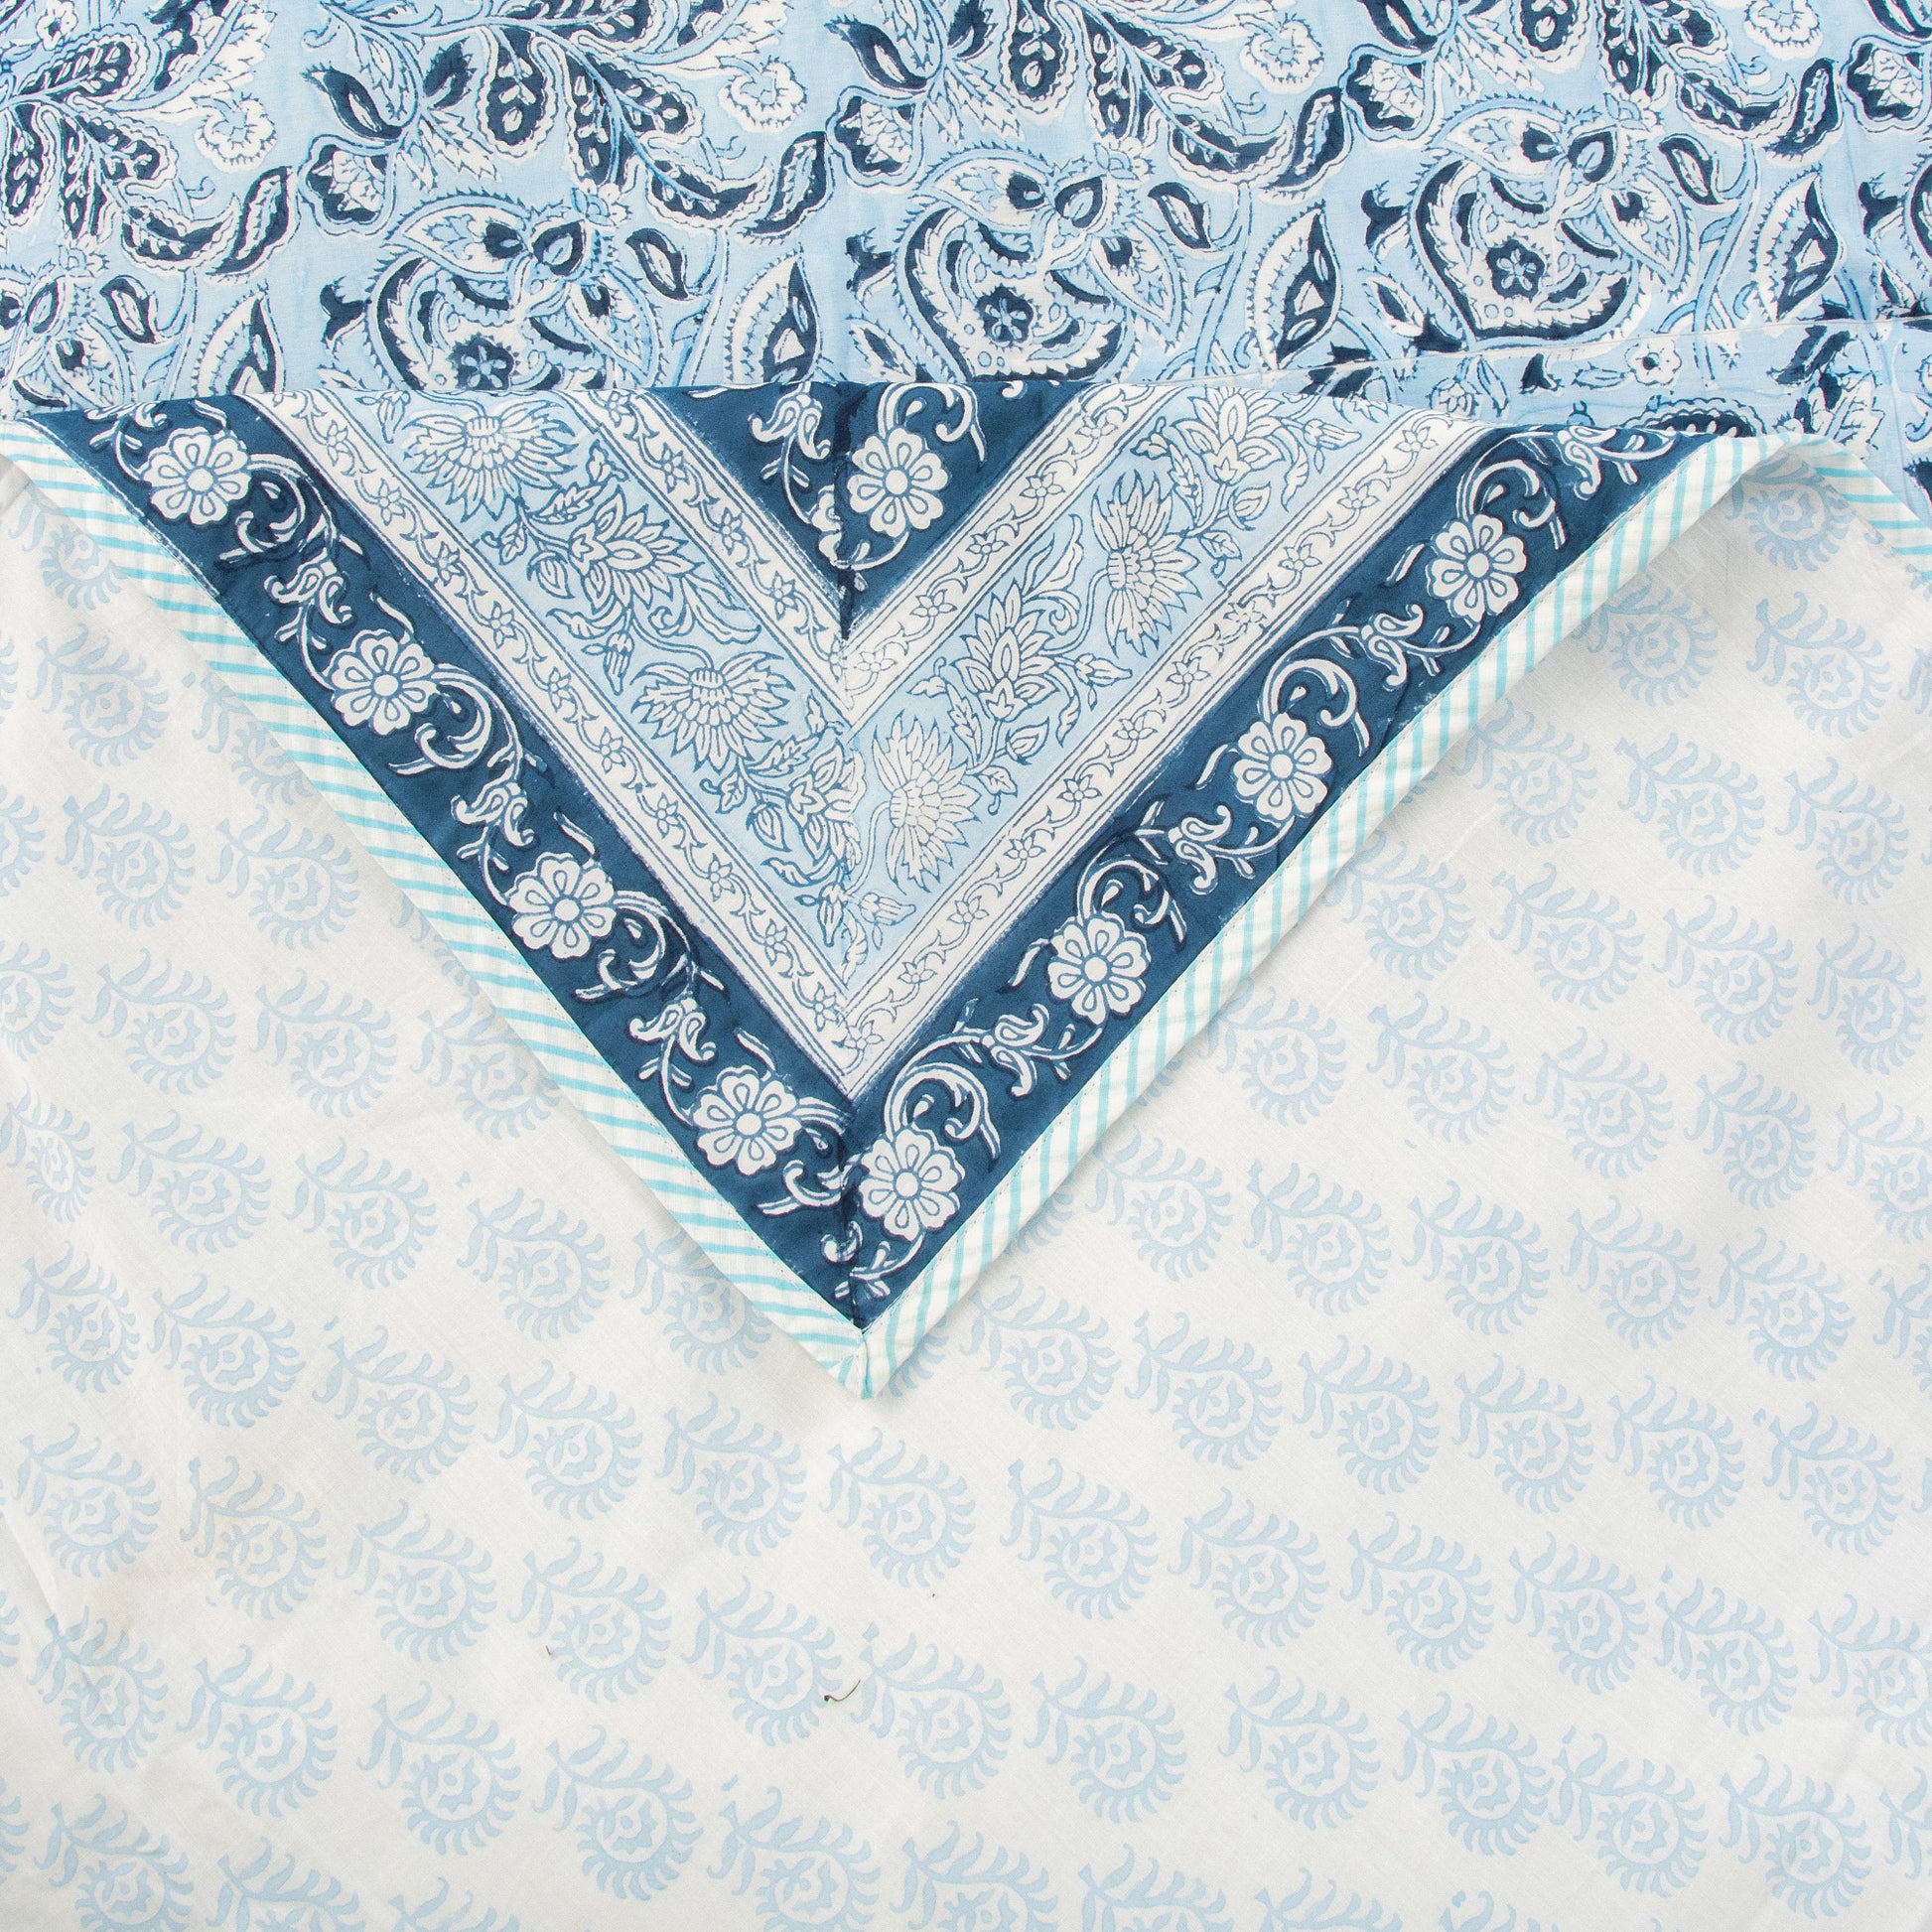 Hand Block Floral Printed Cotton Dohar Blanket Lightweight Online